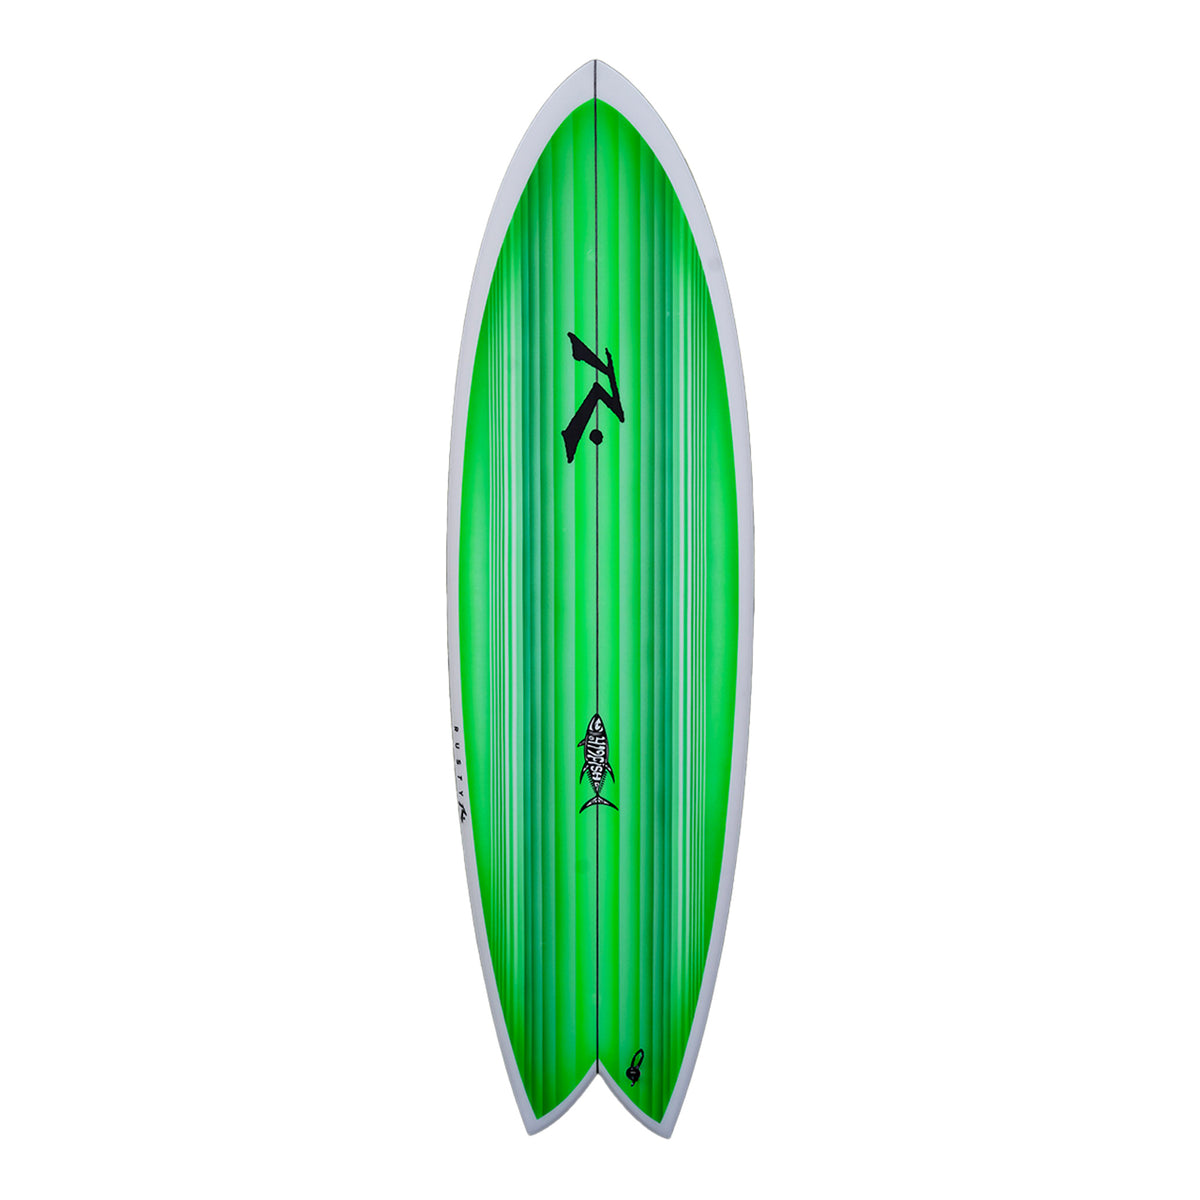 419fish - Alternative - Rusty Surfboards - Top View - Green Gradient